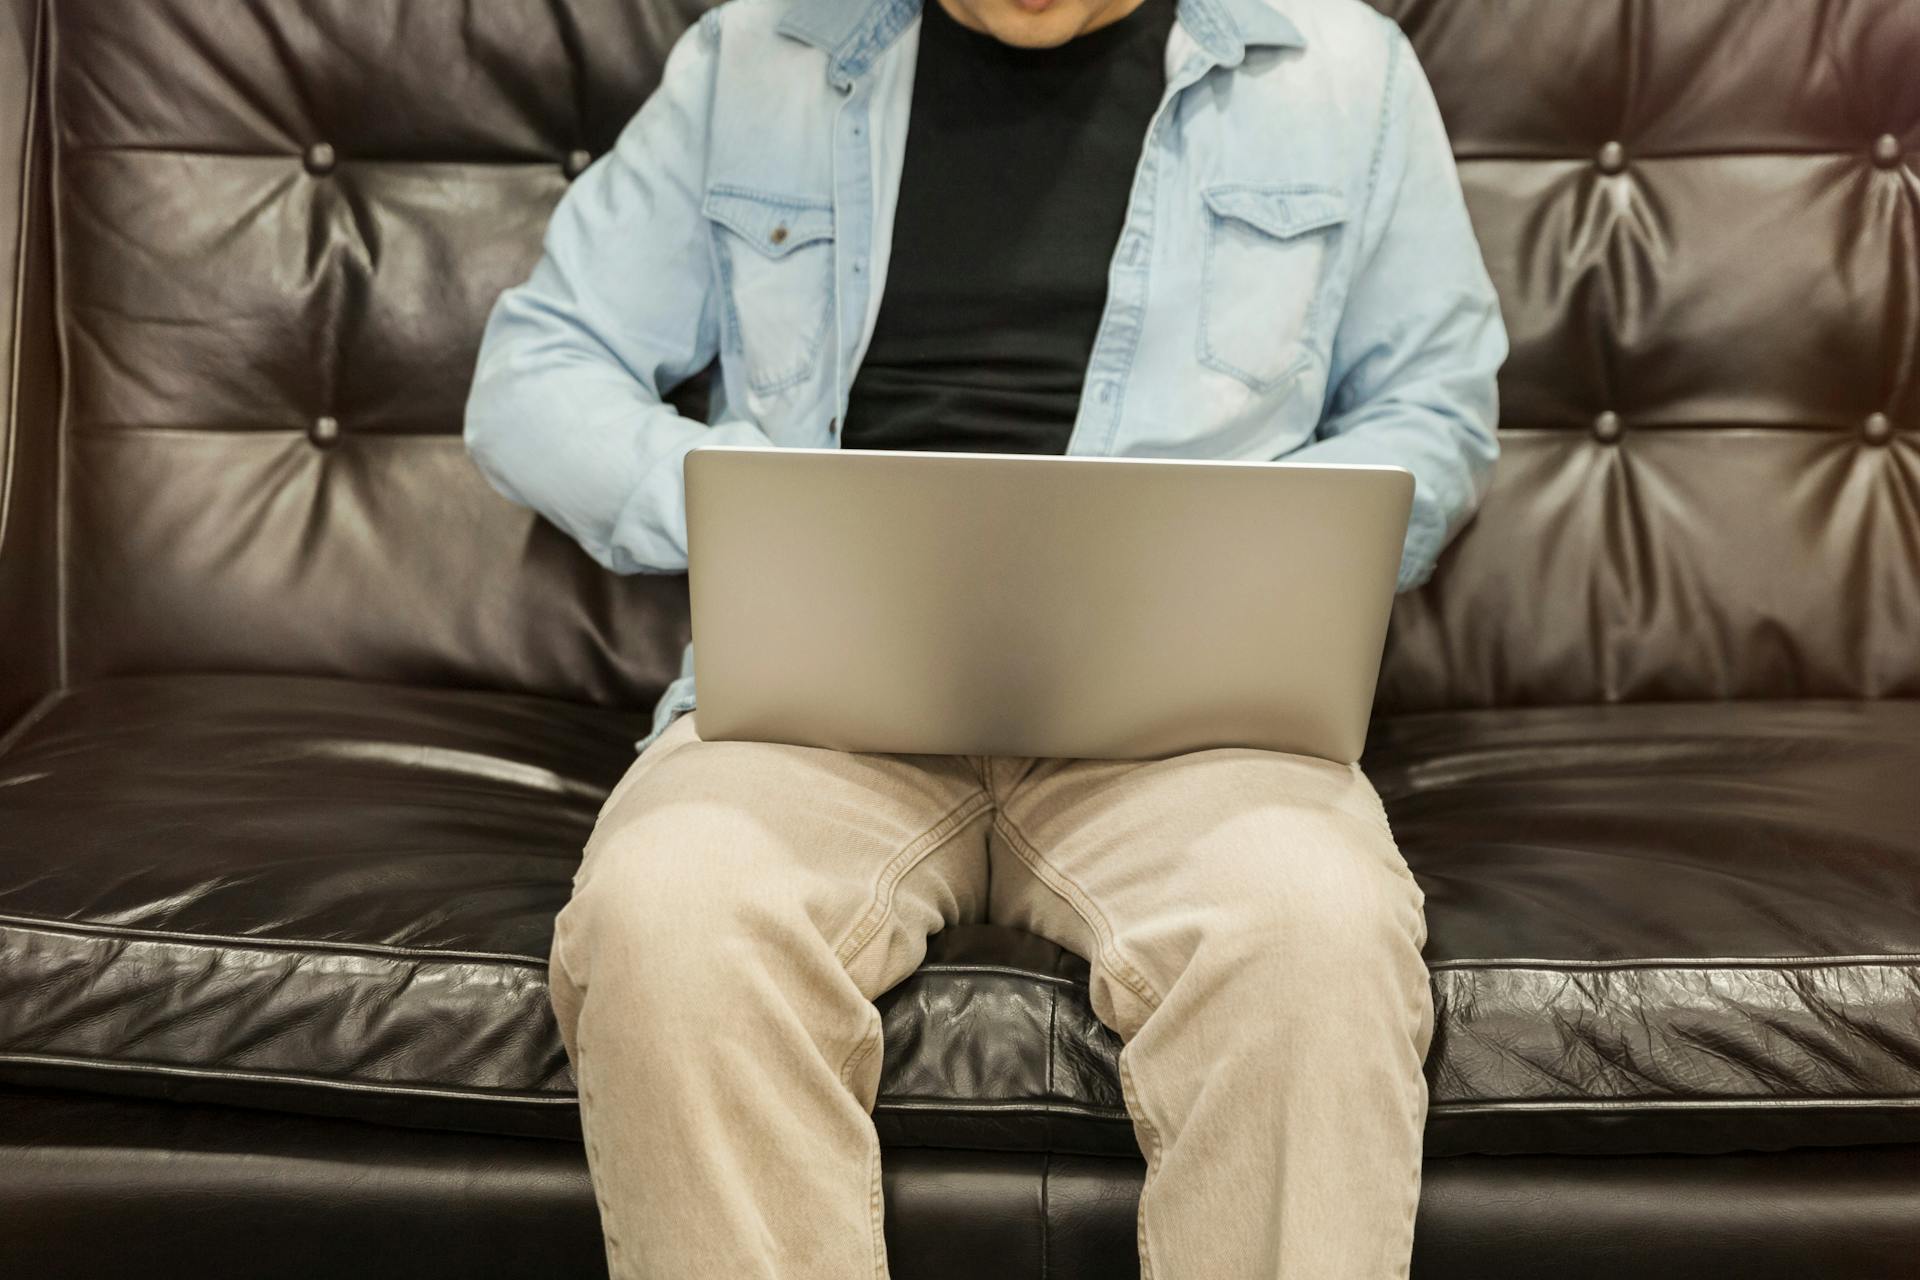 A man using his laptop | Source: Pexels